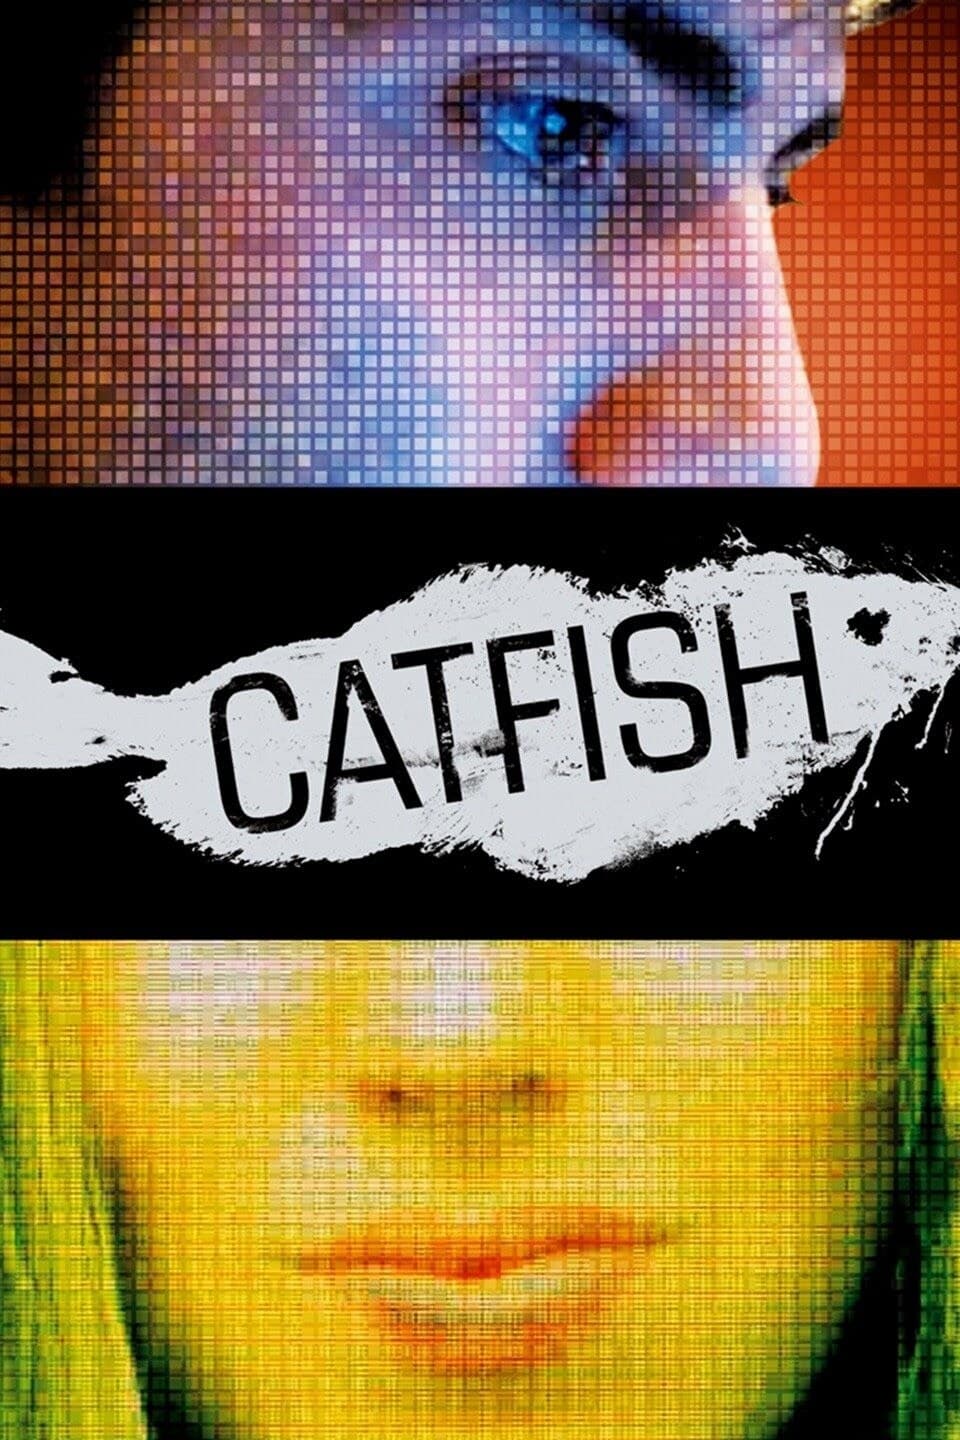 Catfish 2010 movie torrent the good mother 2013 torrent